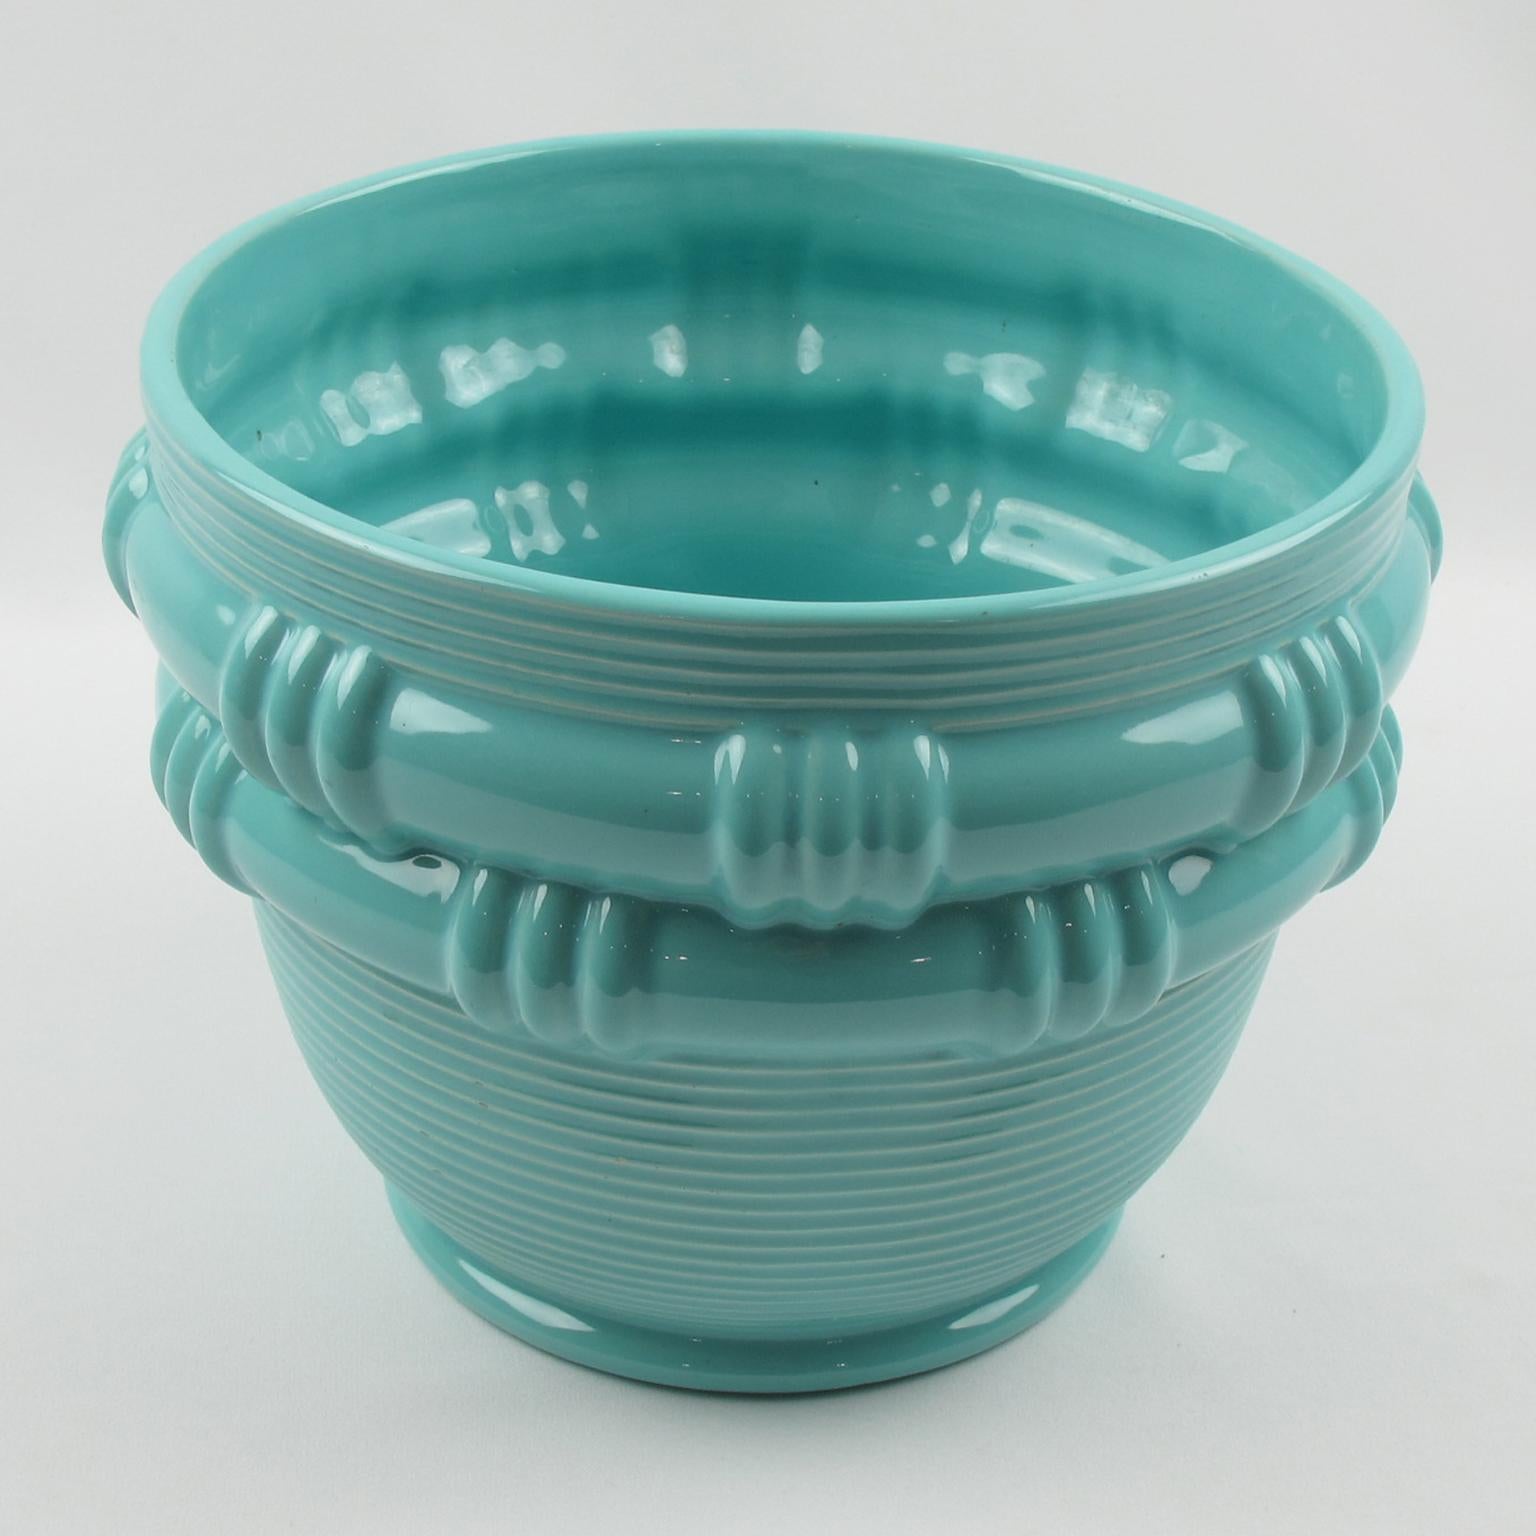 Mid-20th Century Blanche Letalle for Saint Clement Turquoise Ceramic Vase Planter, 1950s For Sale